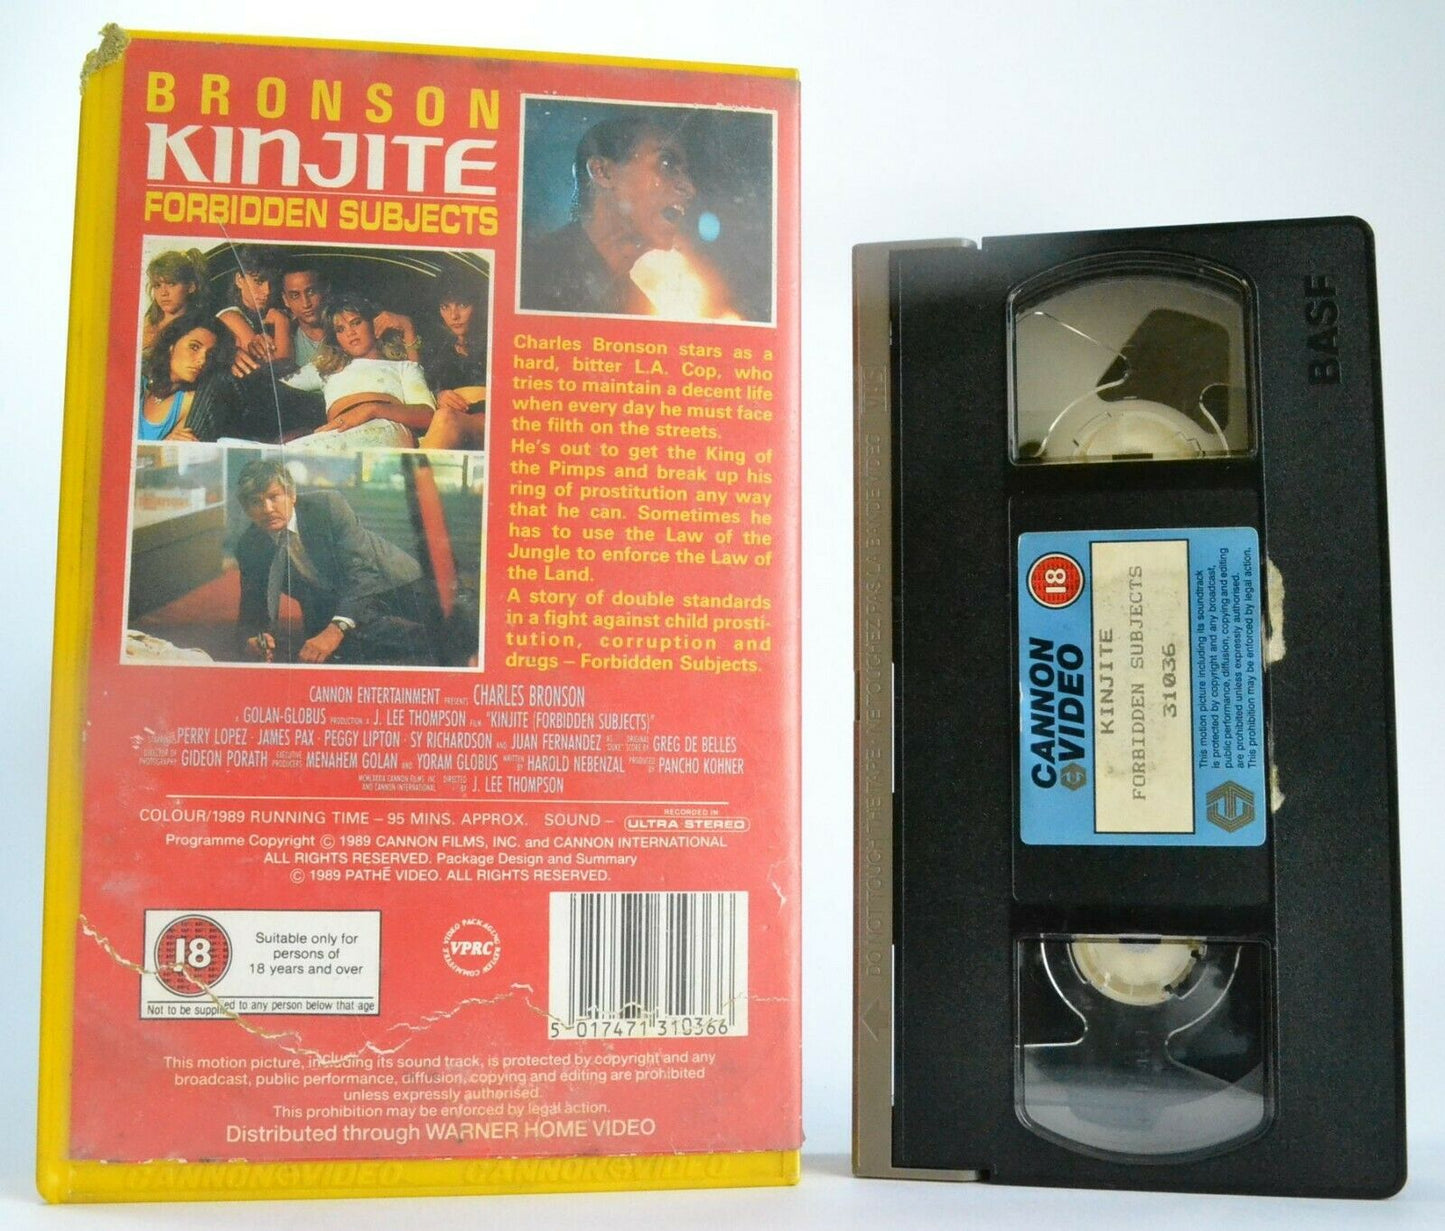 Kinjite: Forbidden Subjects (Pathe Video) - Action Thriller - C.Bronson - VHS-